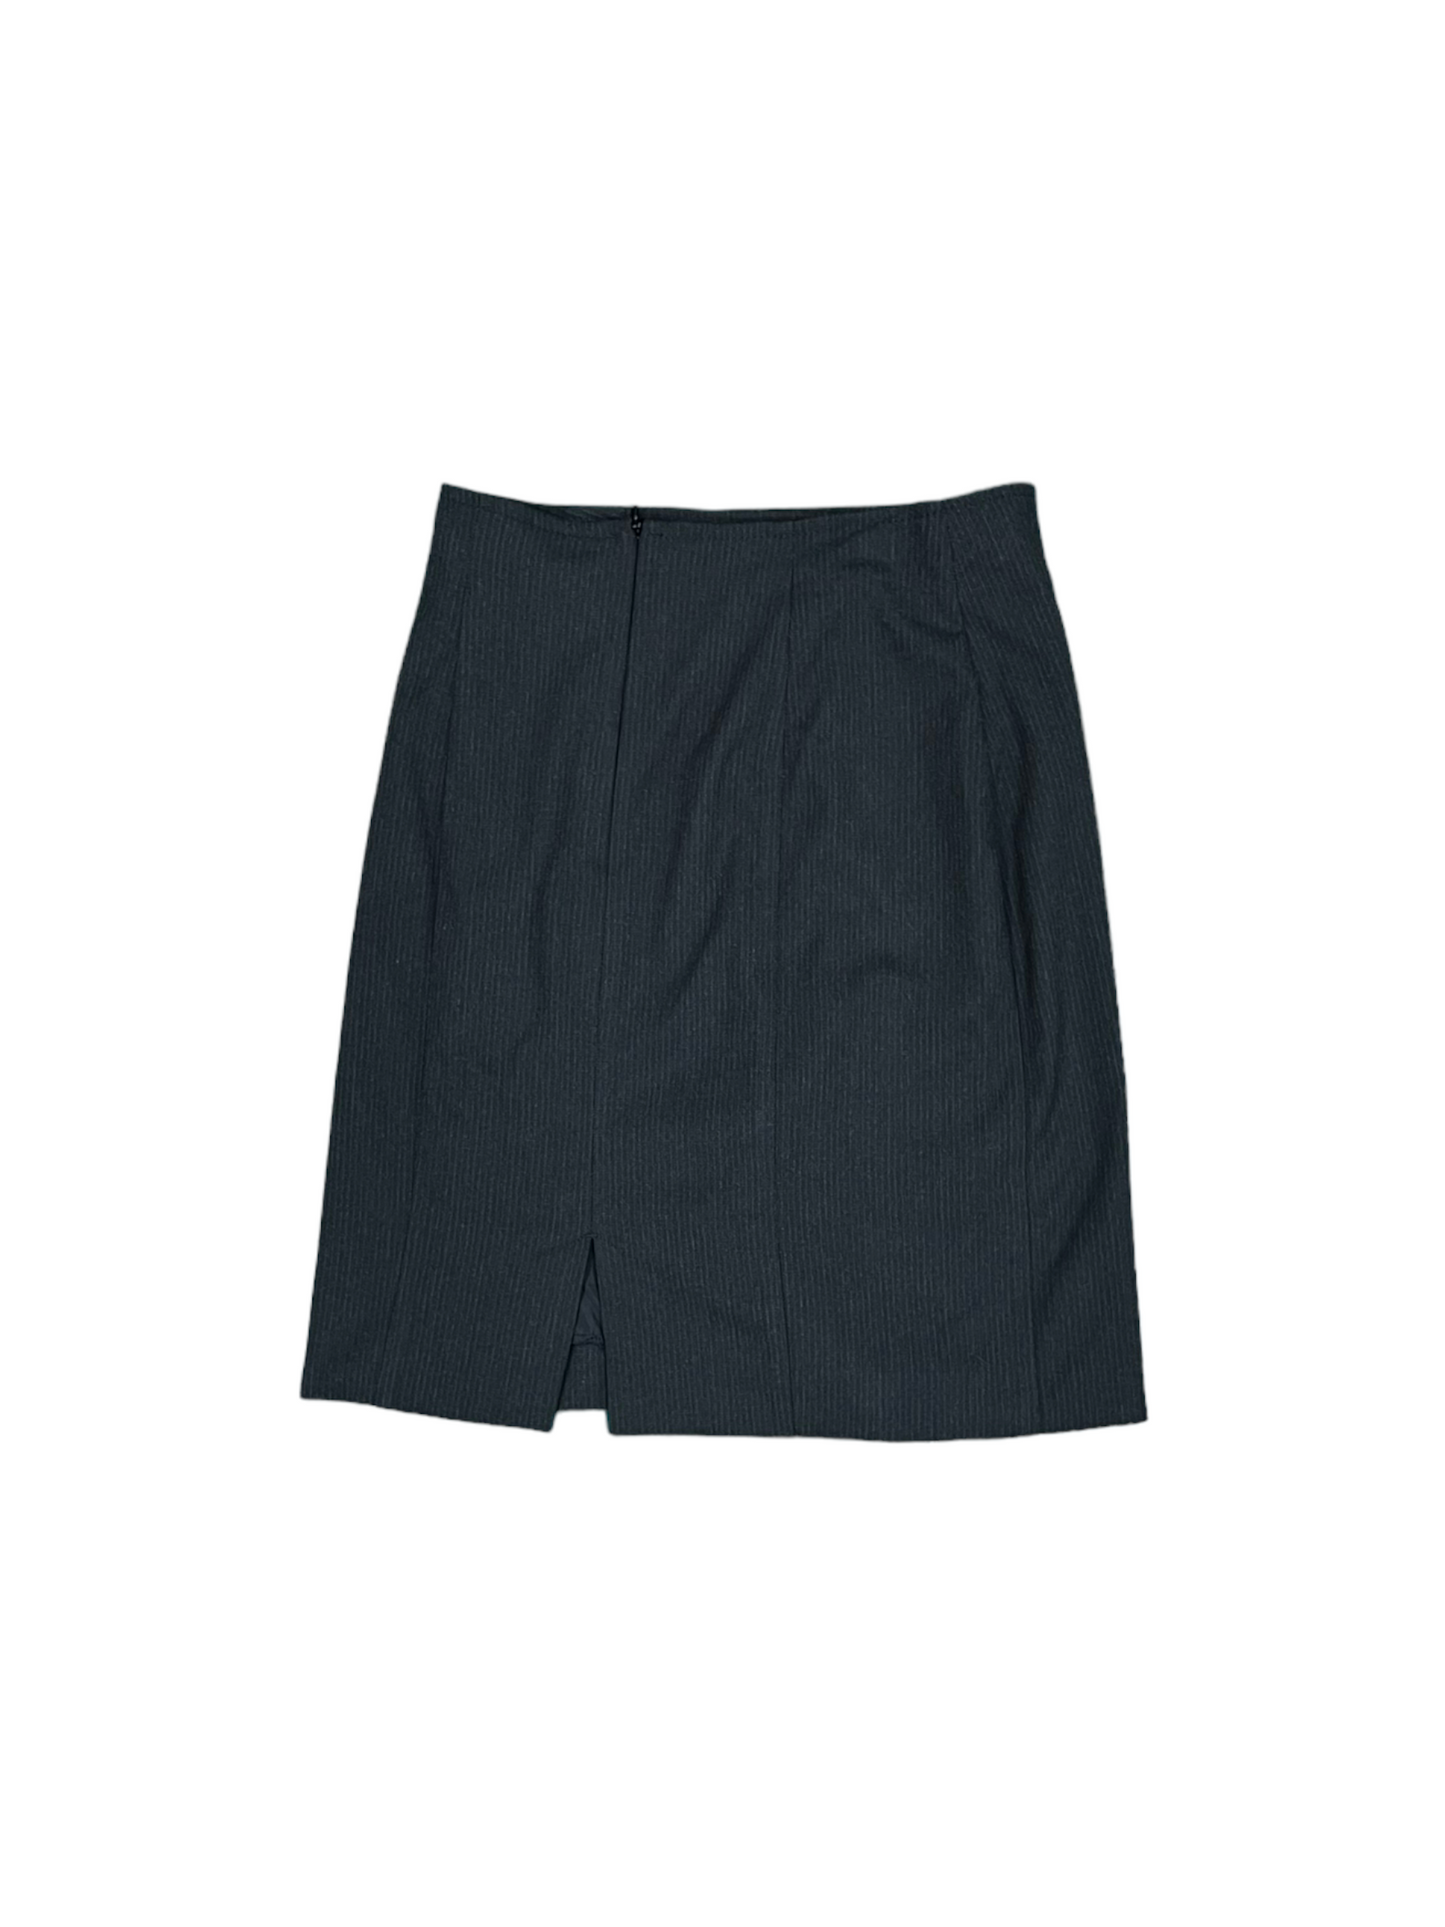 Womens Fitted Skirt - UK 12